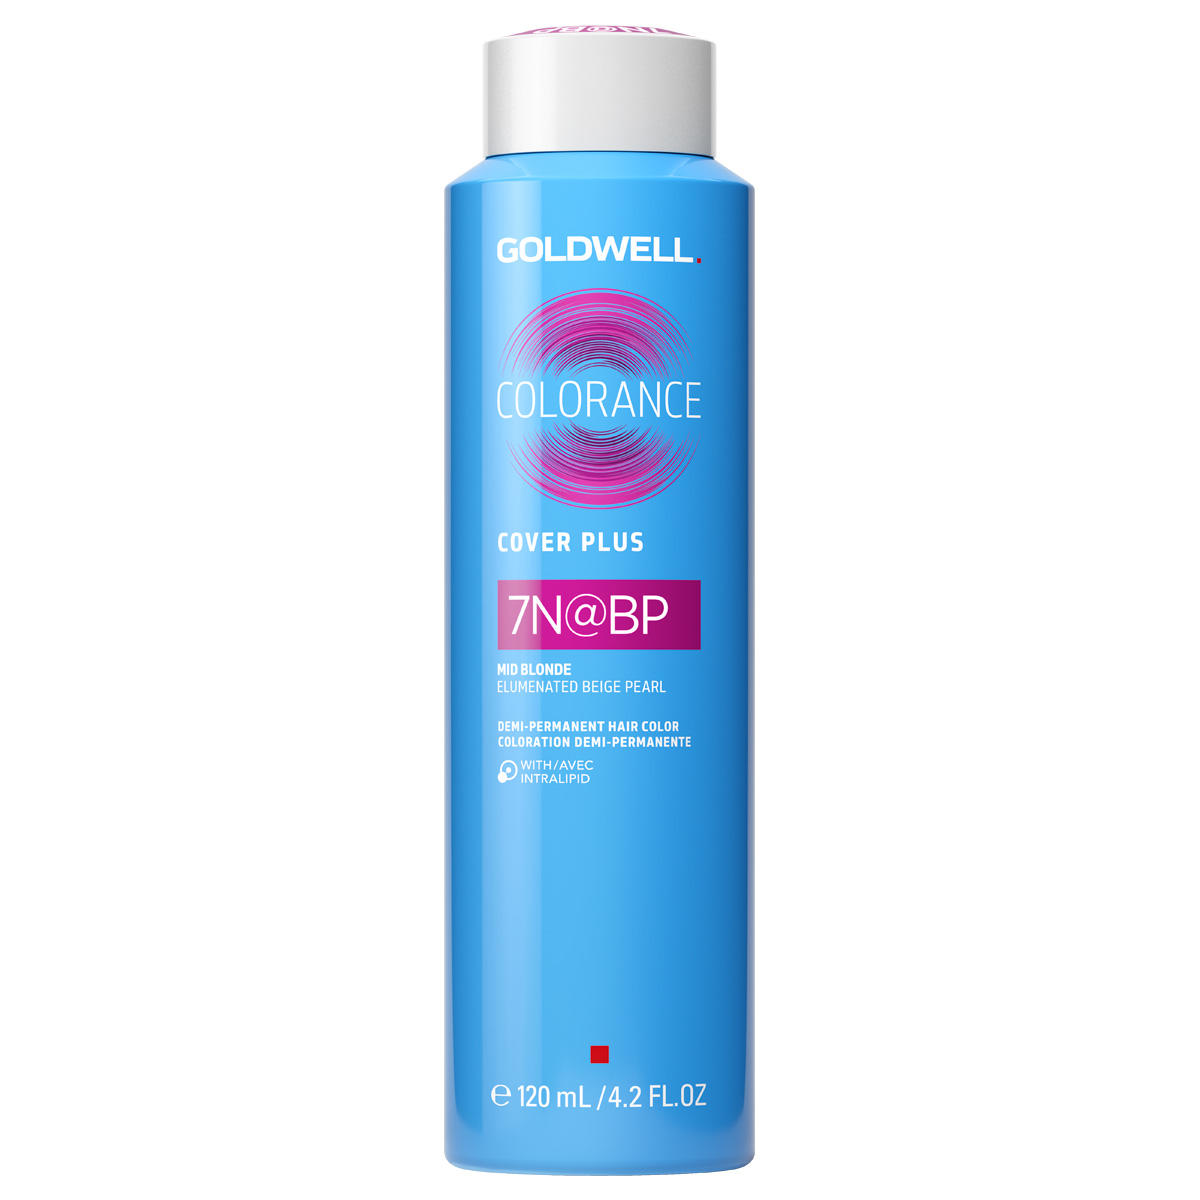 Goldwell Colorance Cover Plus Demi-Permanent Hair Color 7N@BP Mid Blonde Elumenated Beige Pearl 120 ml